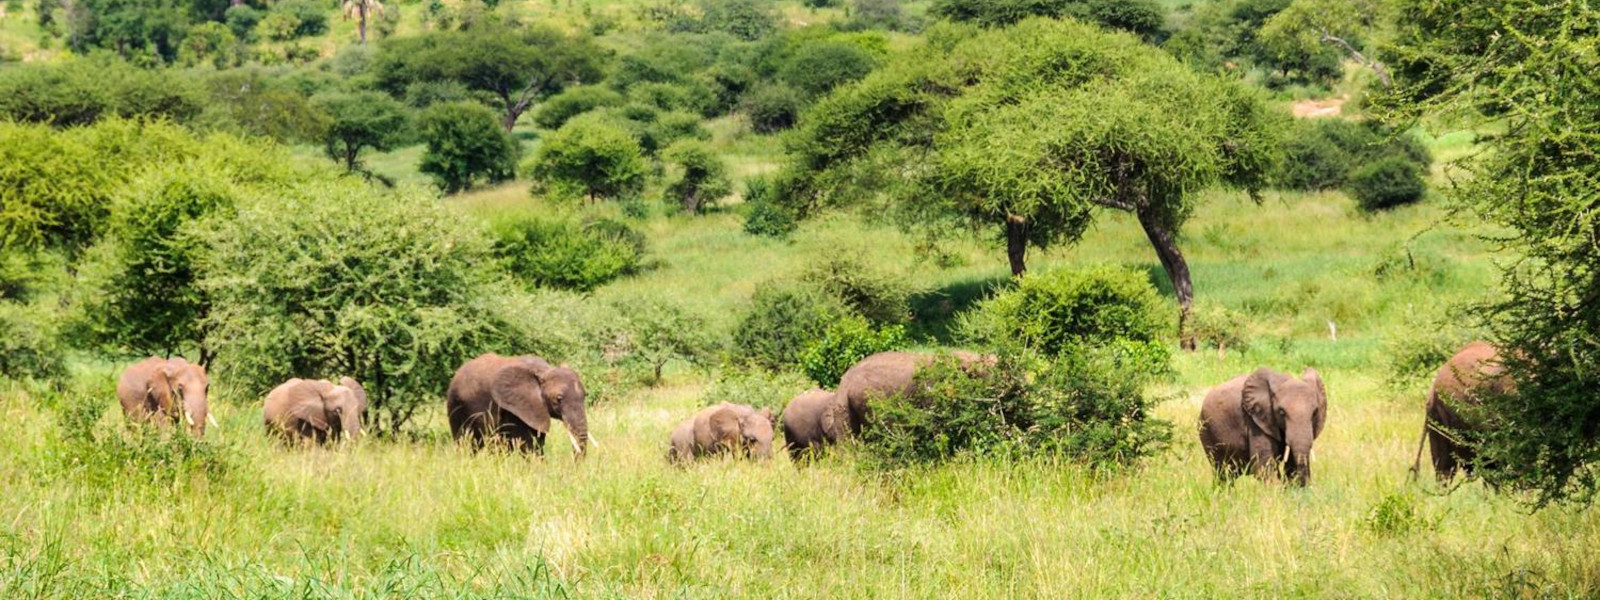 Tanzania southern safari packages